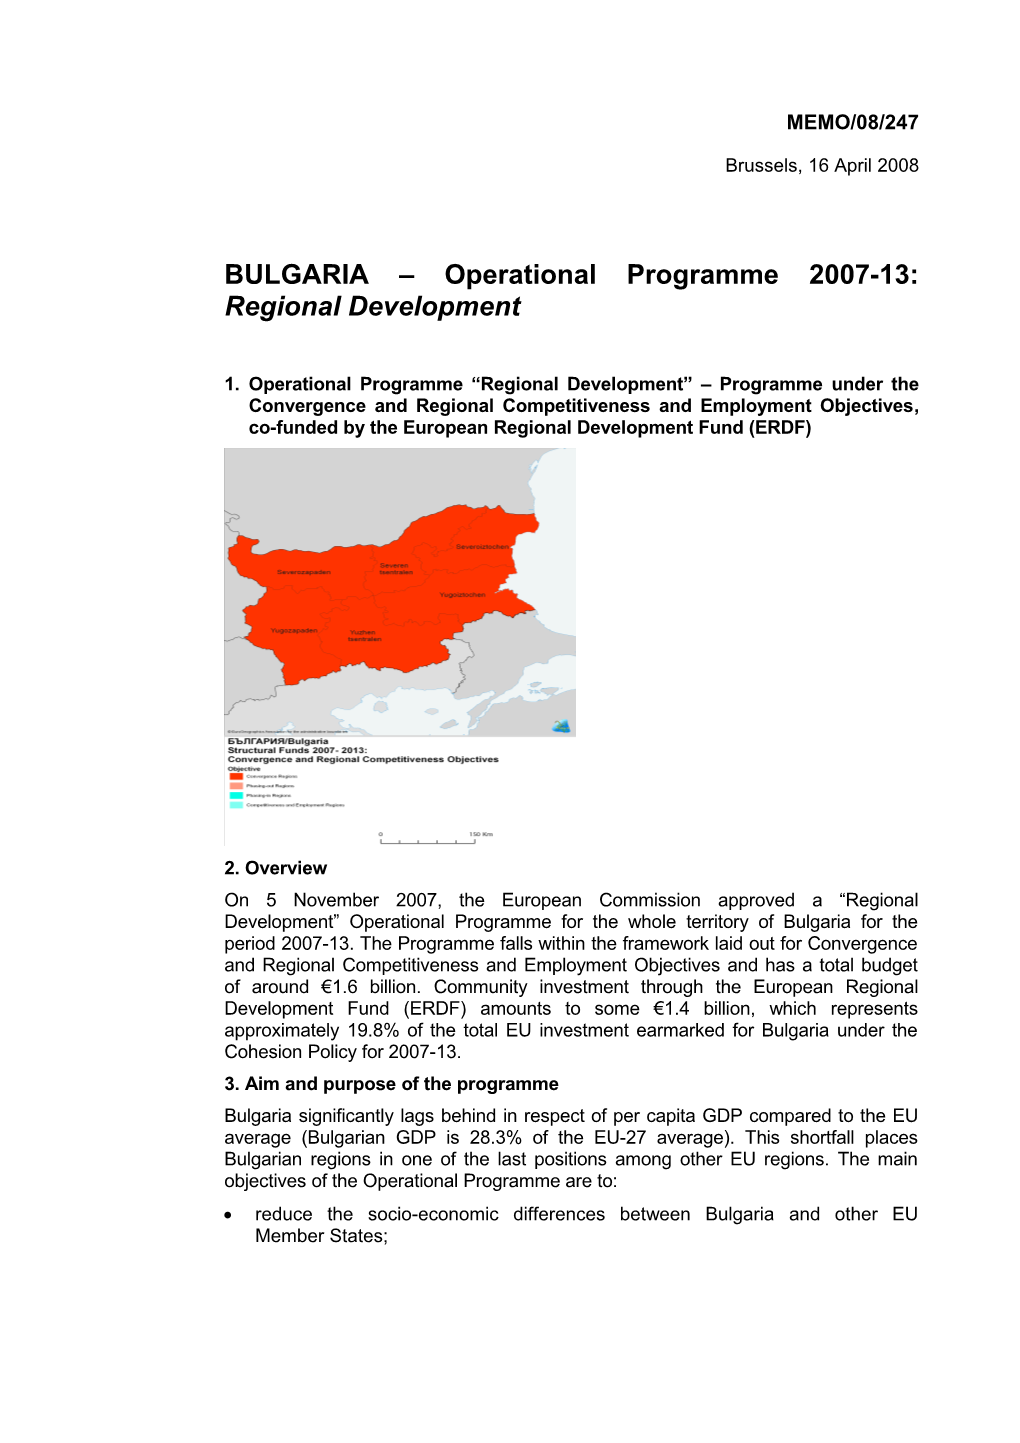 BULGARIA Operational Programme2007-13: Regional Development